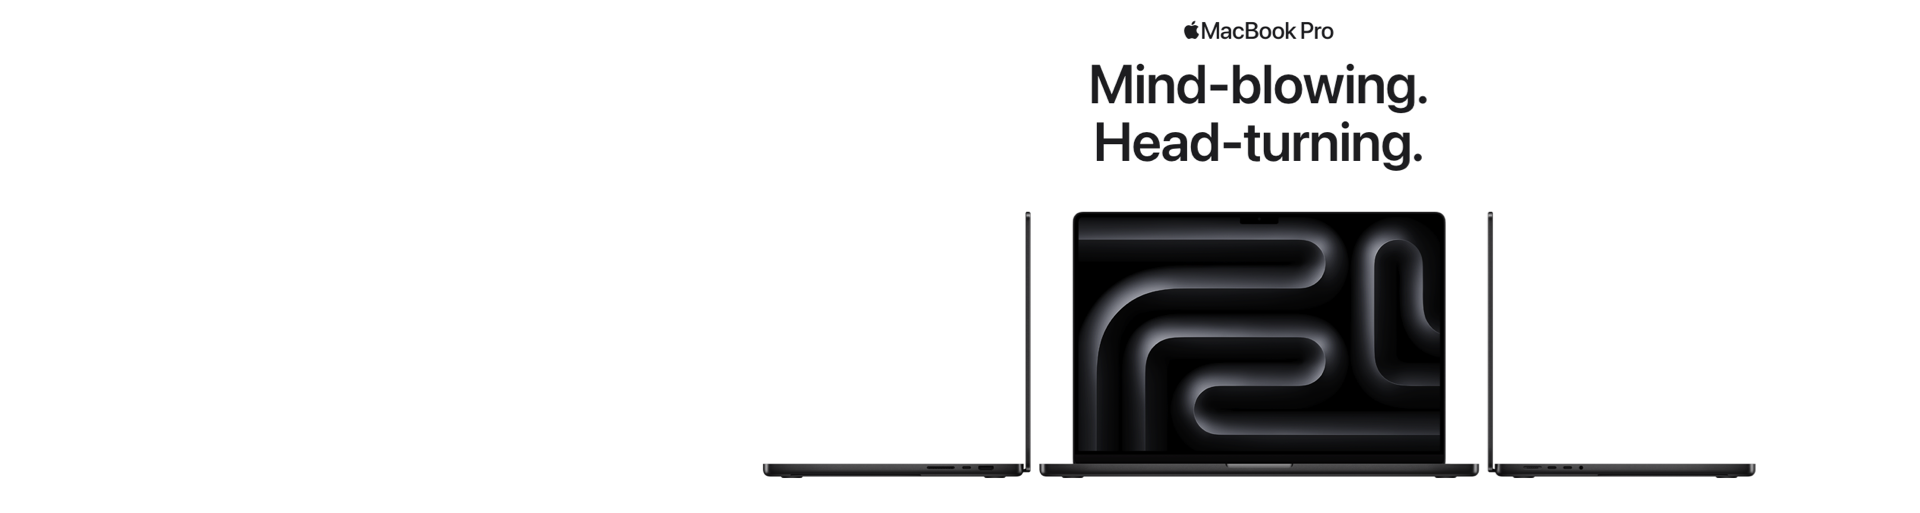 MacBook Pro. Mind-blowing. Head-turning.